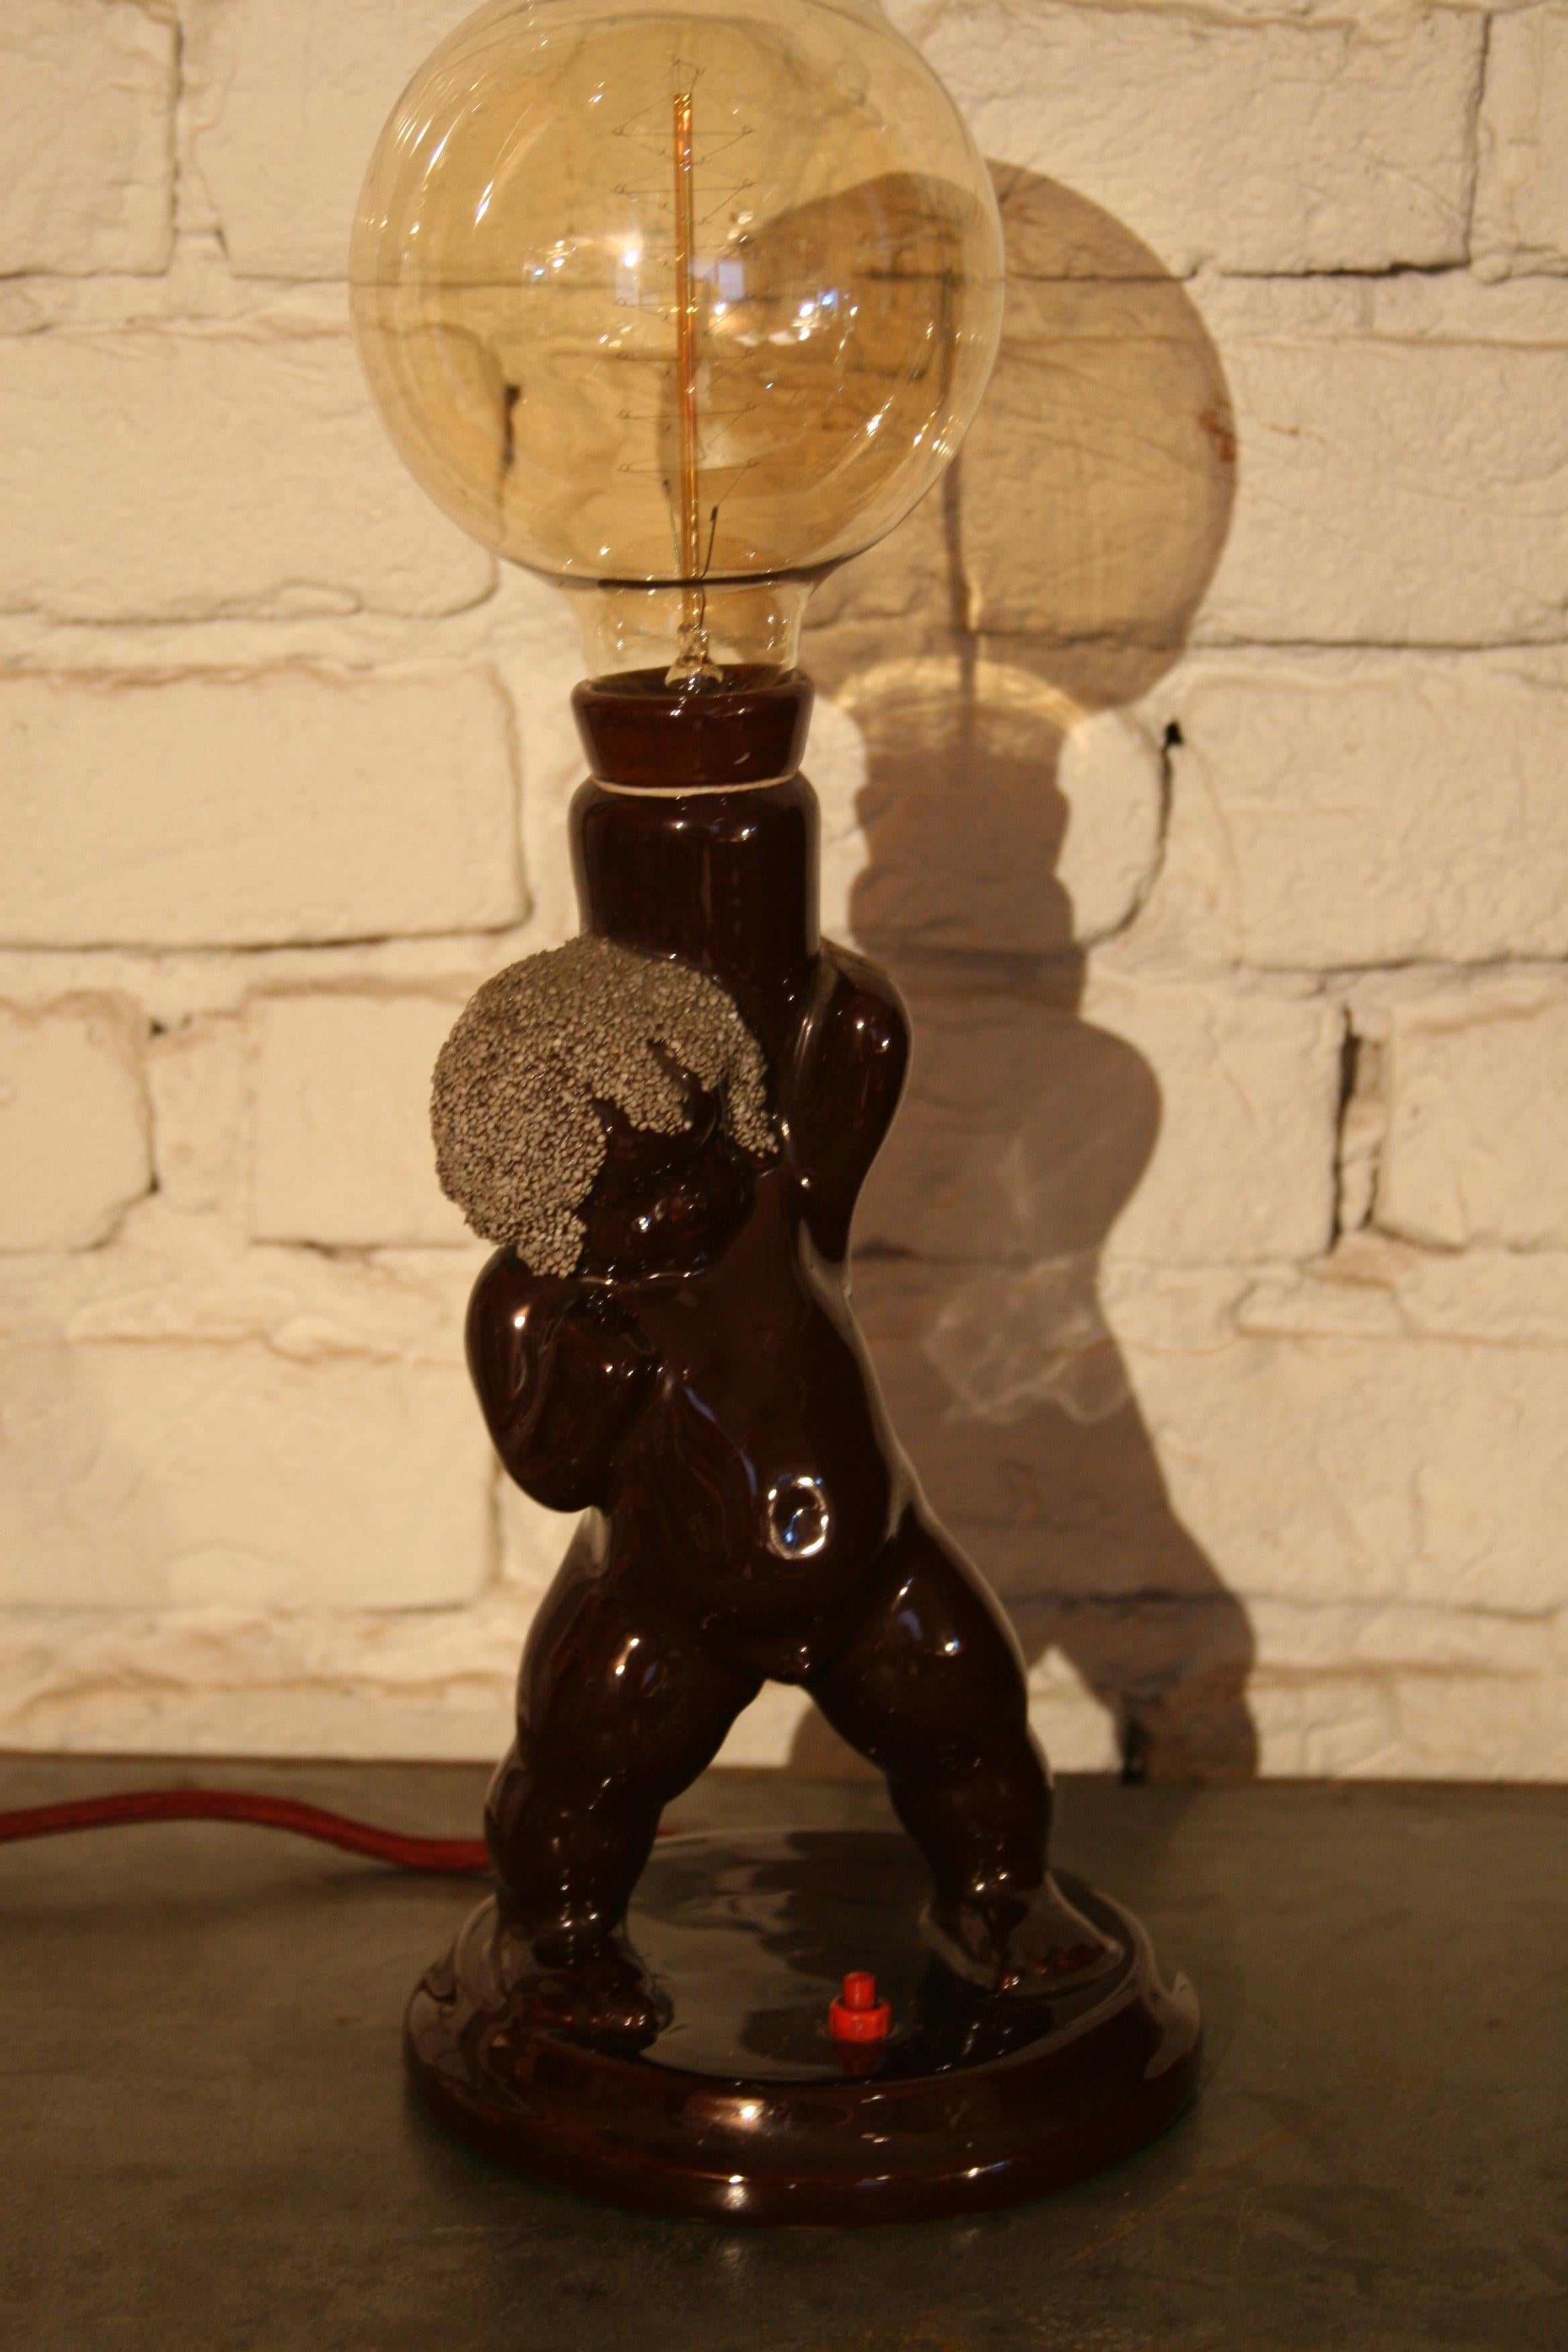 Ceramic Night Lamp “Baby” For Sale